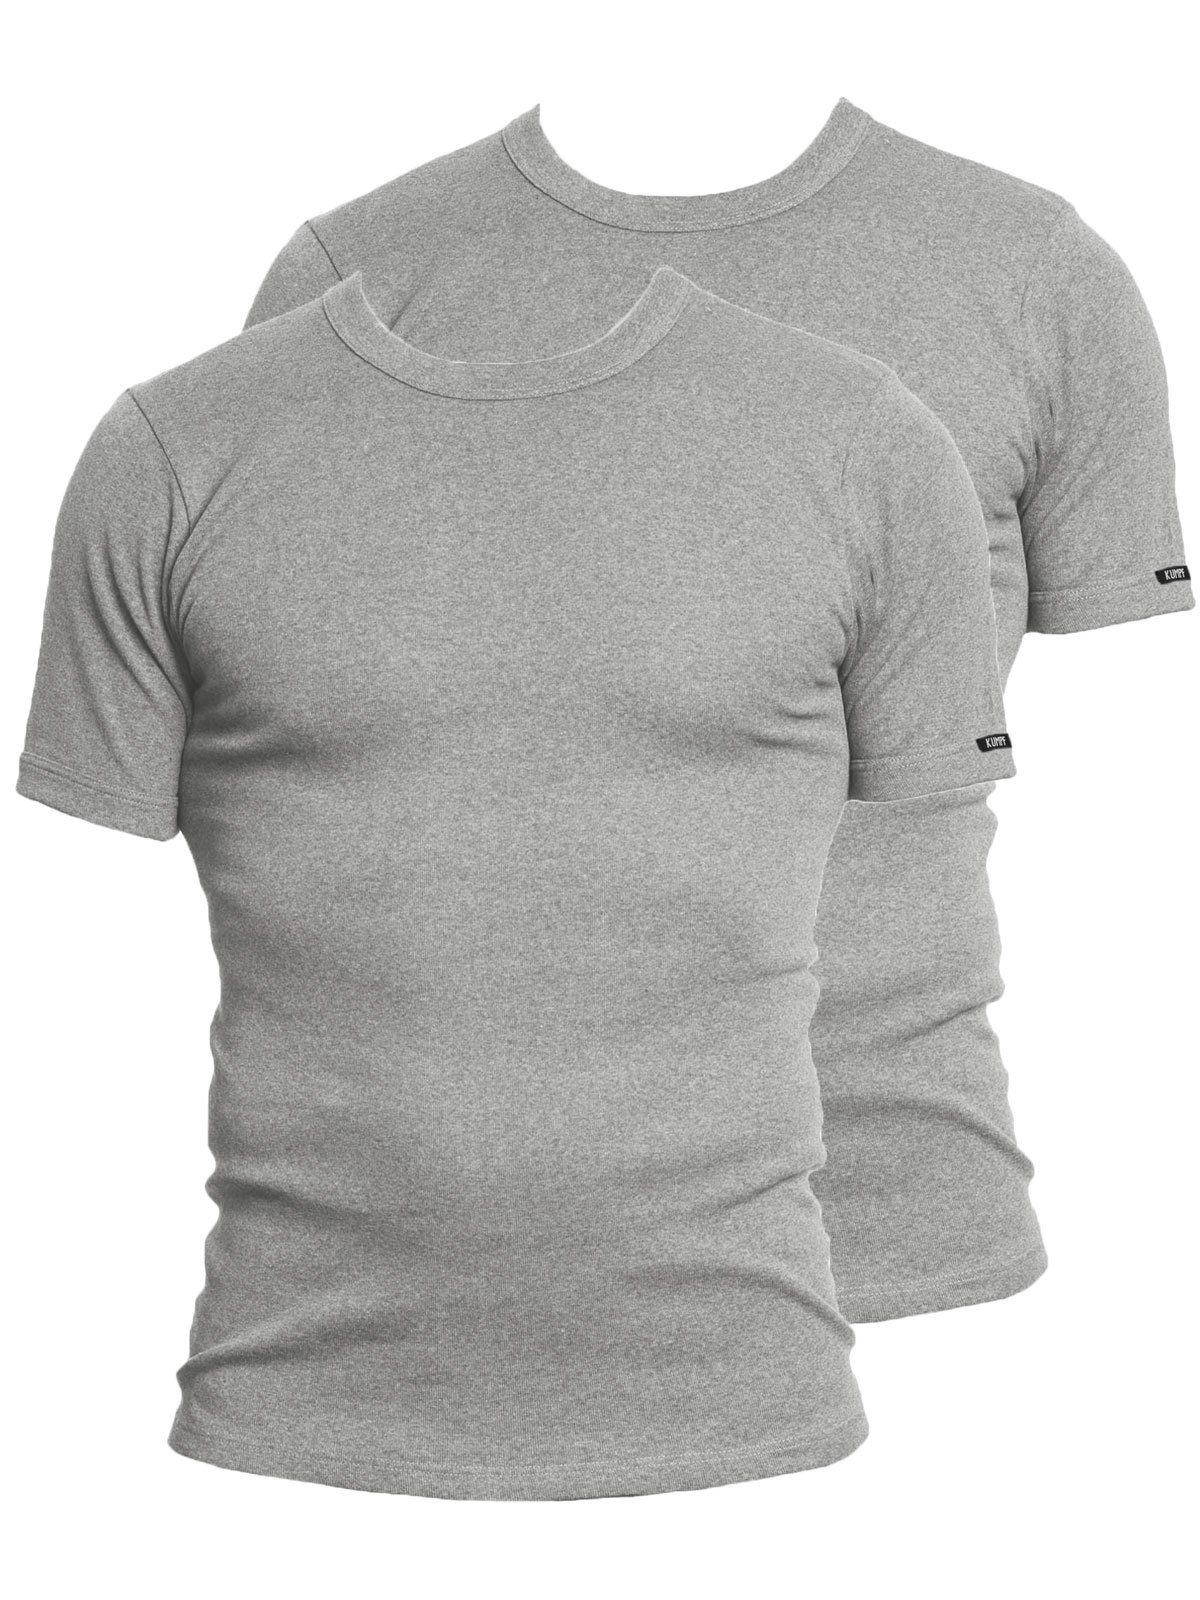 KUMPF Unterziehshirt 2er Sparpack Herren T-Shirt Bio Cotton (Spar-Set, 2-St) hohe Markenqualität stahlgrau-melange | Unterhemden